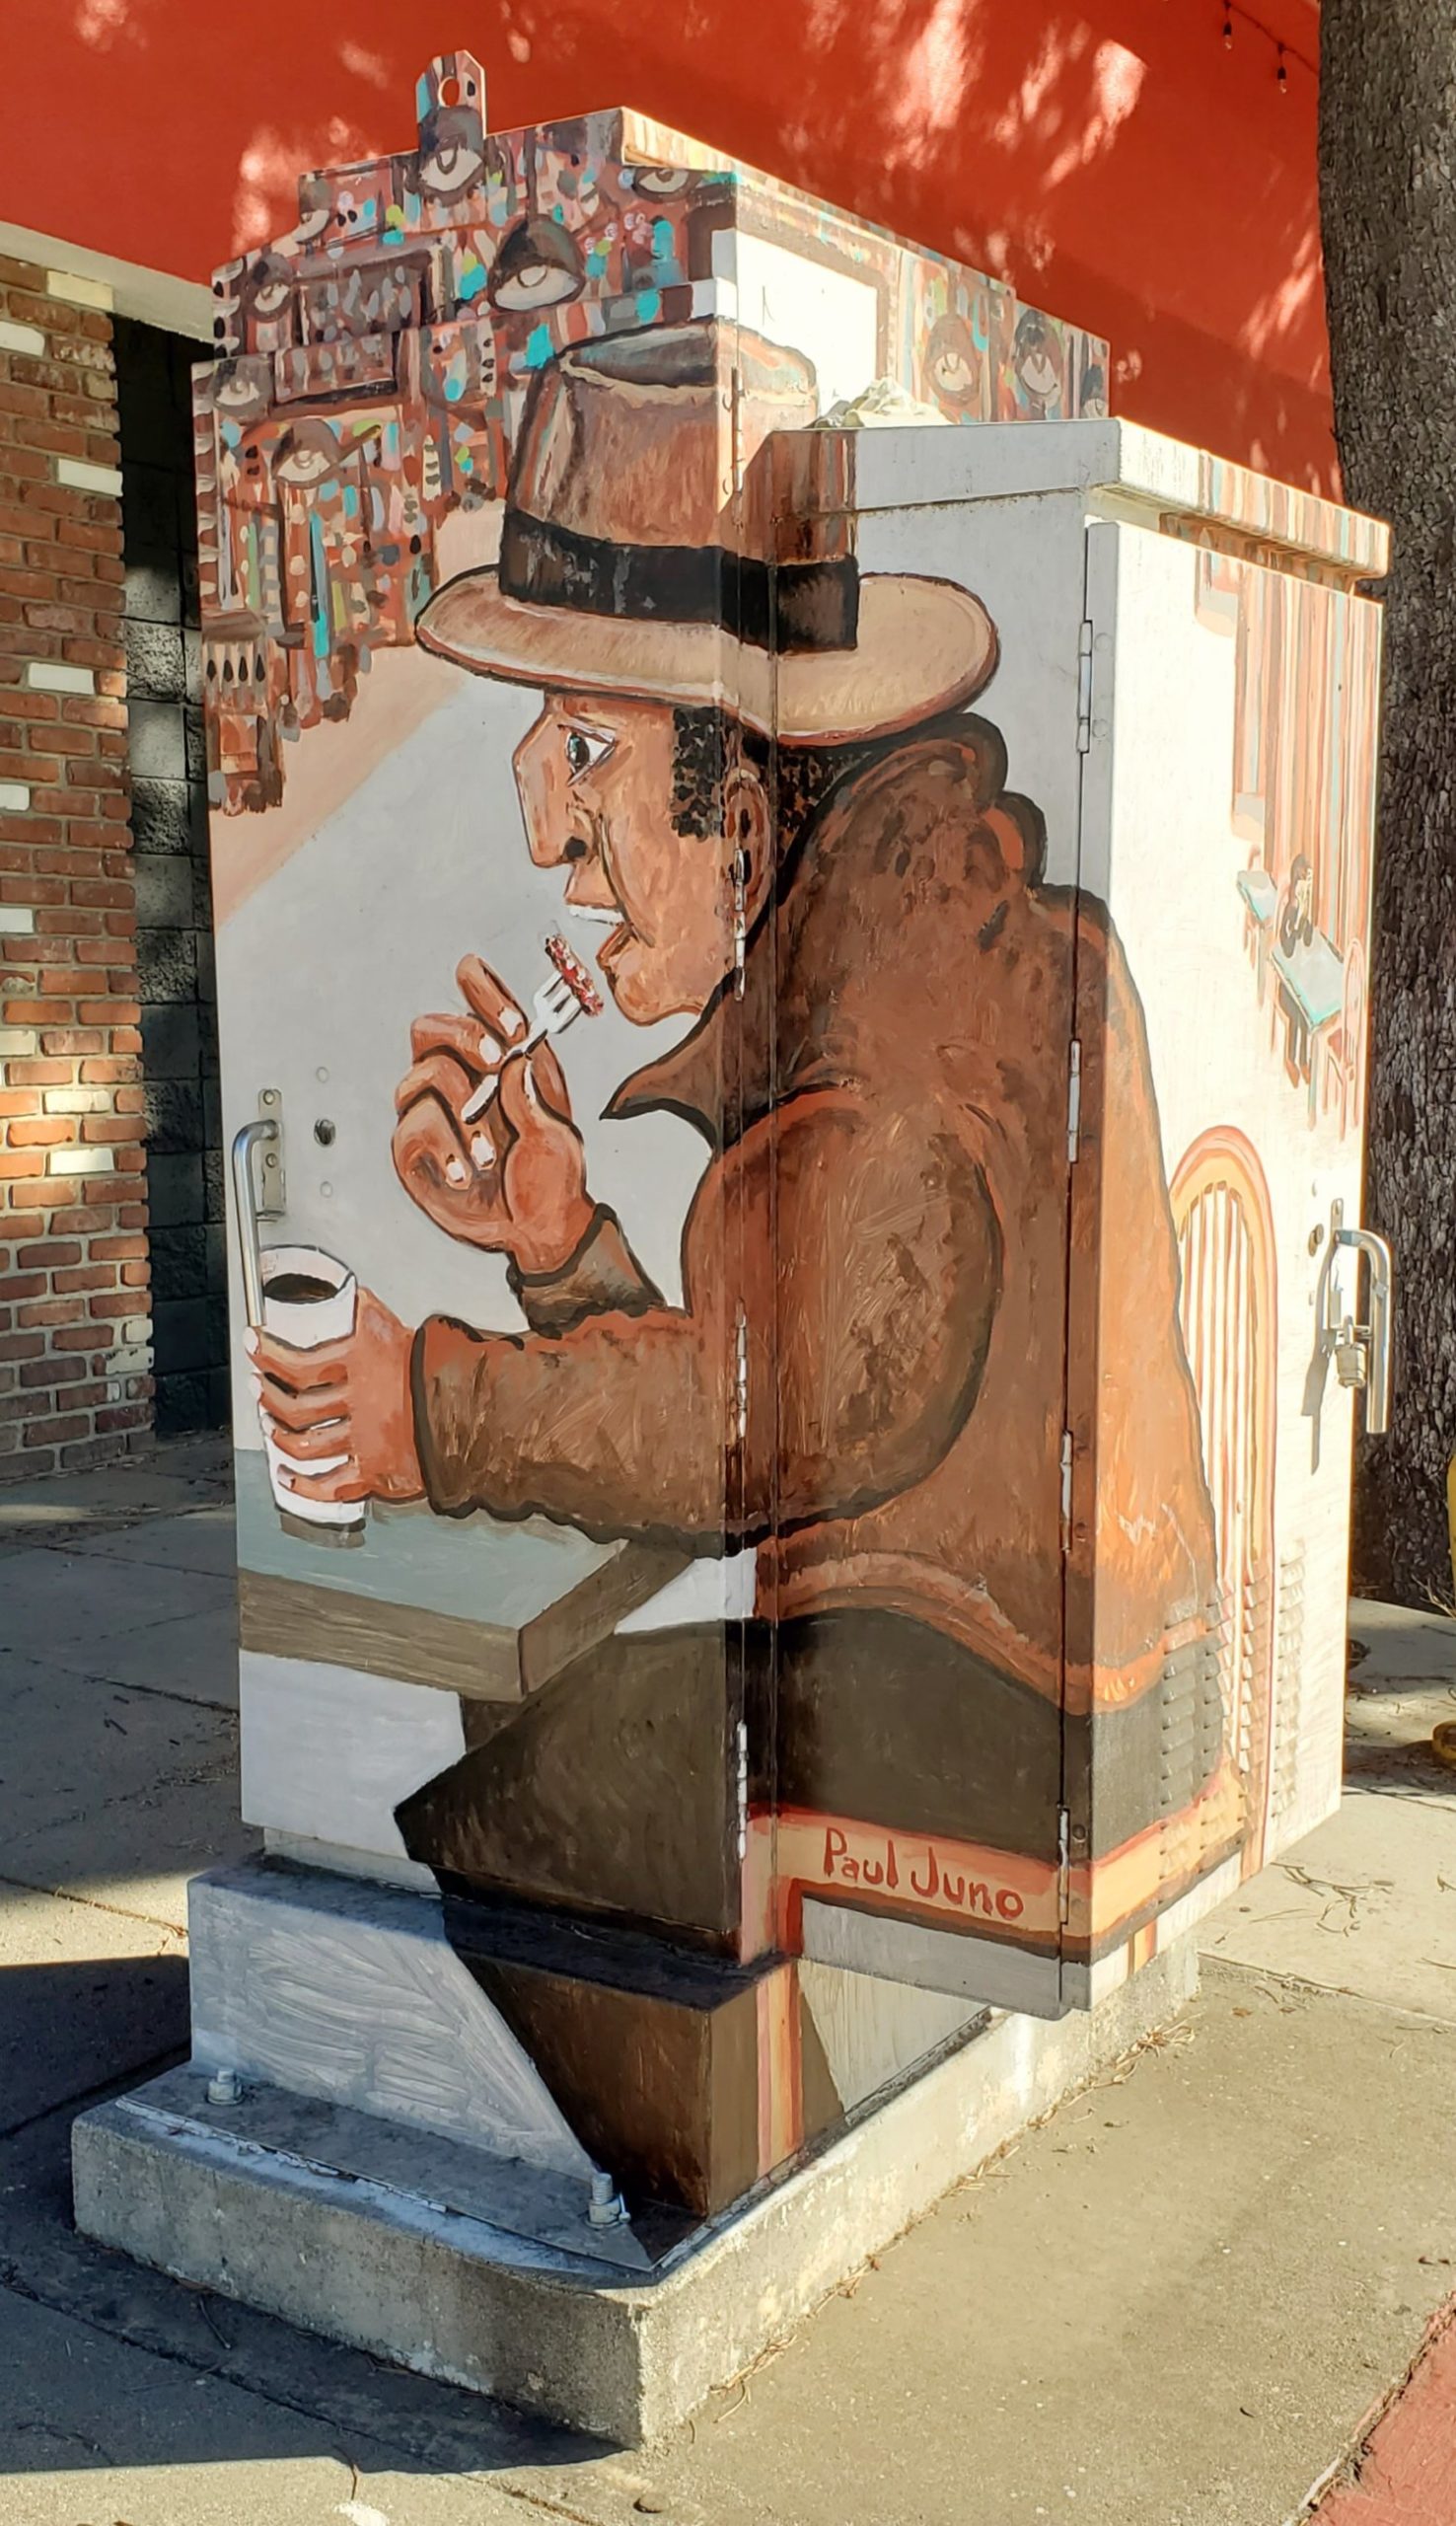 Utility Box Art, A Guide to South Pasadena's Public Art Project, The  South Pasadenan